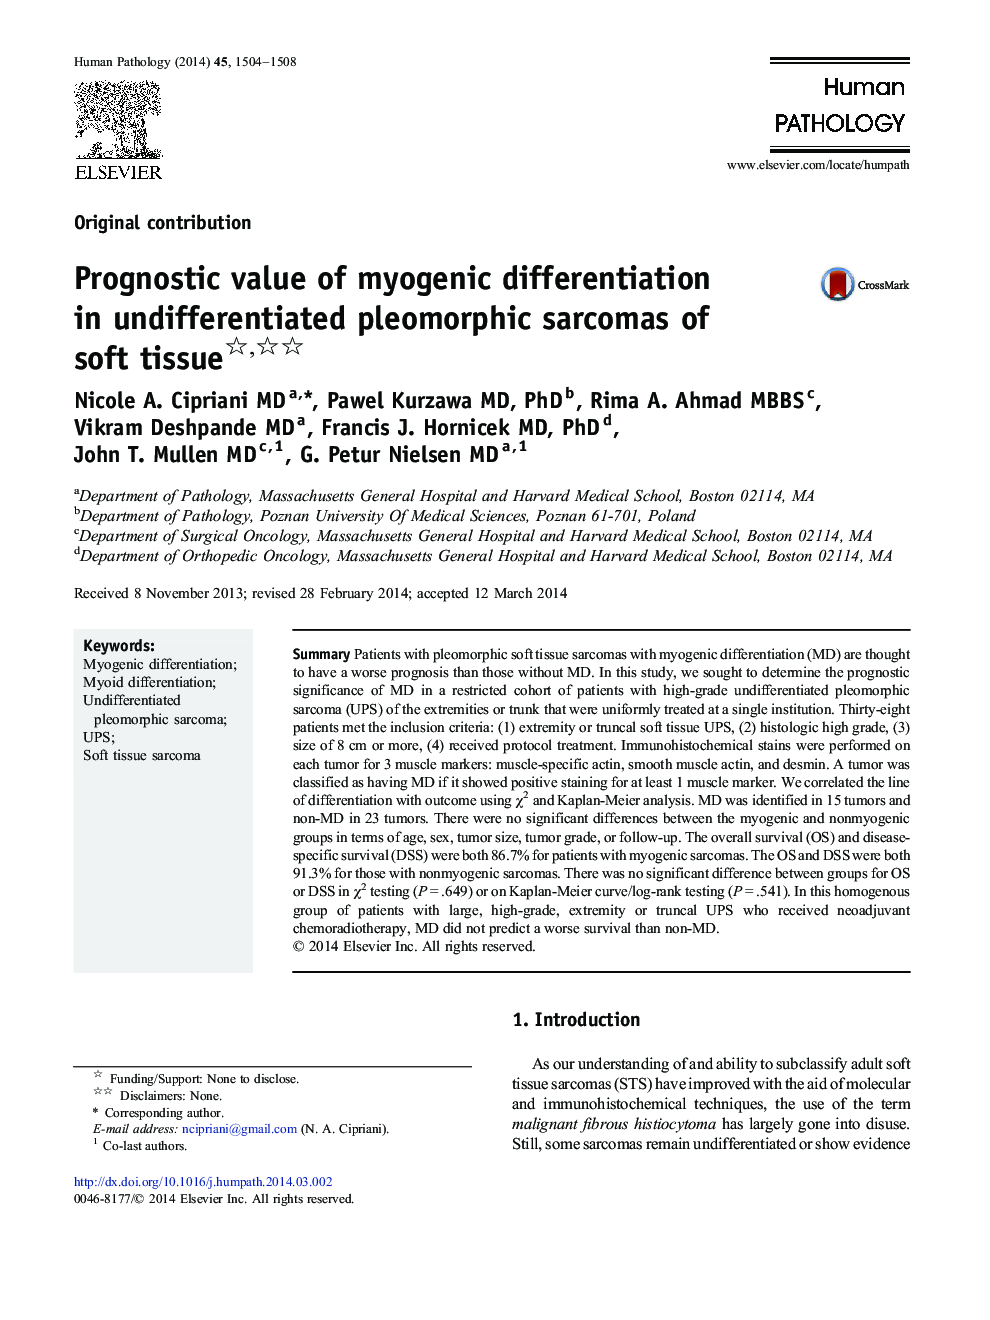 Prognostic value of myogenic differentiation in undifferentiated pleomorphic sarcomas of soft tissue 